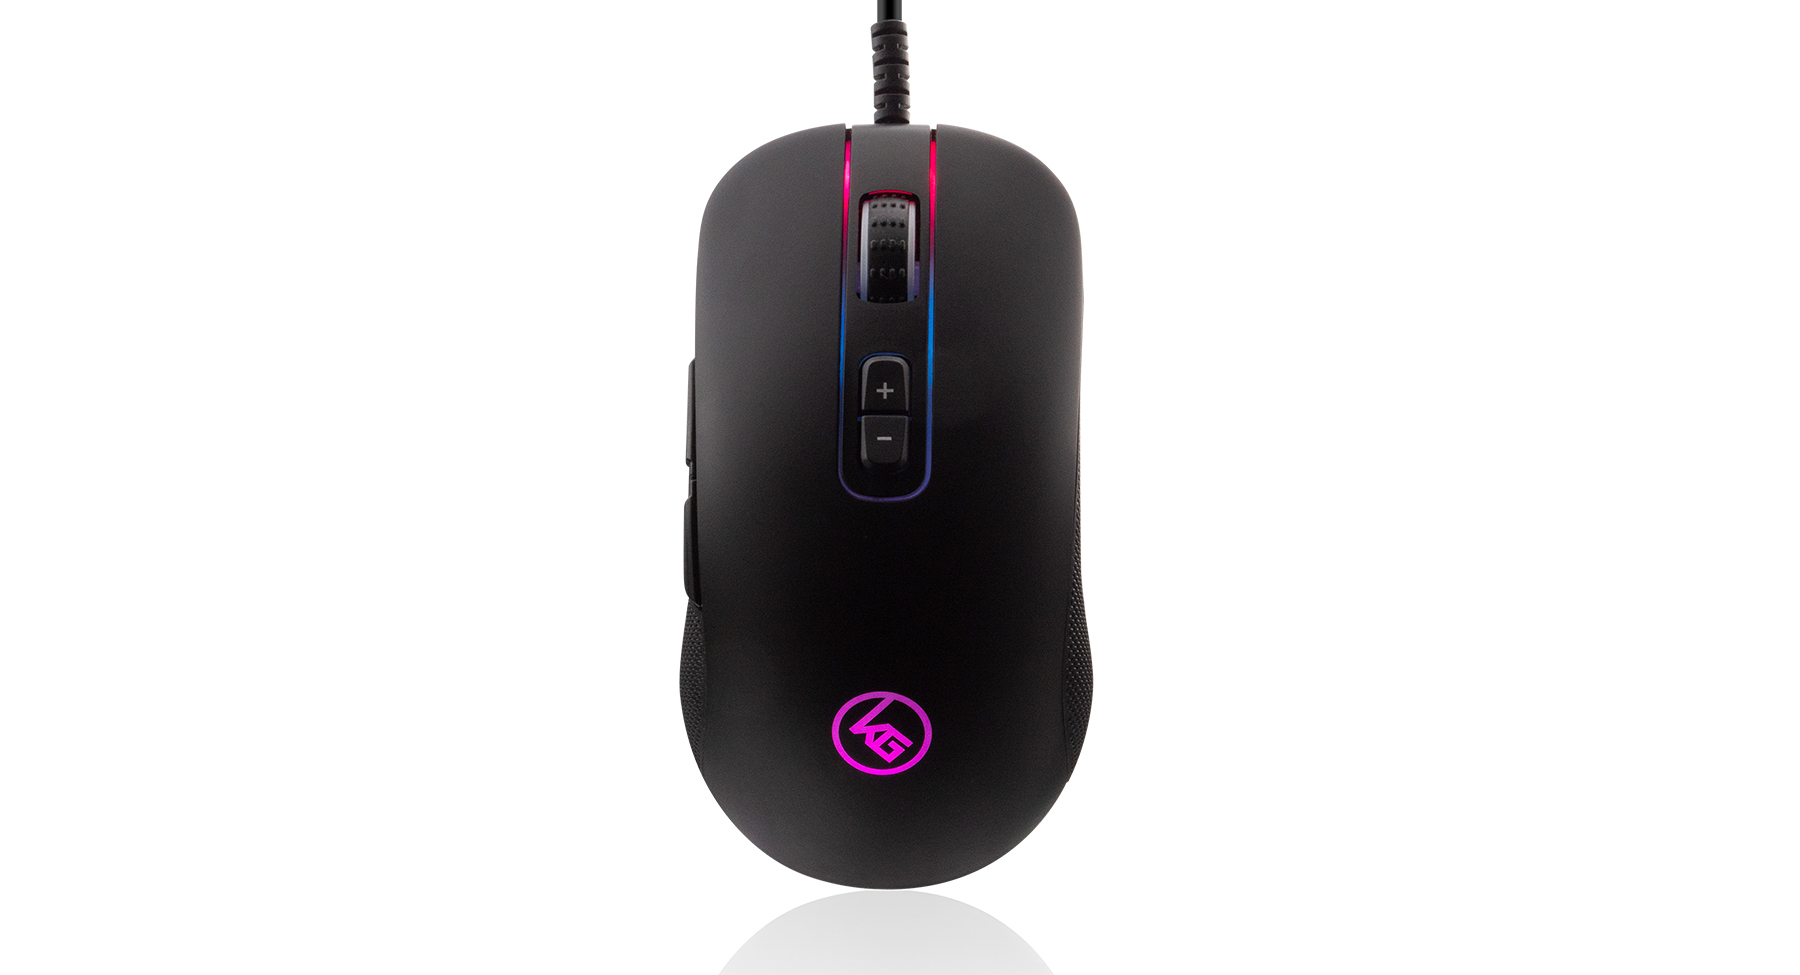 IOGEAR - GME631 - Kaliber Gaming KORONA RGB Gaming Mouse